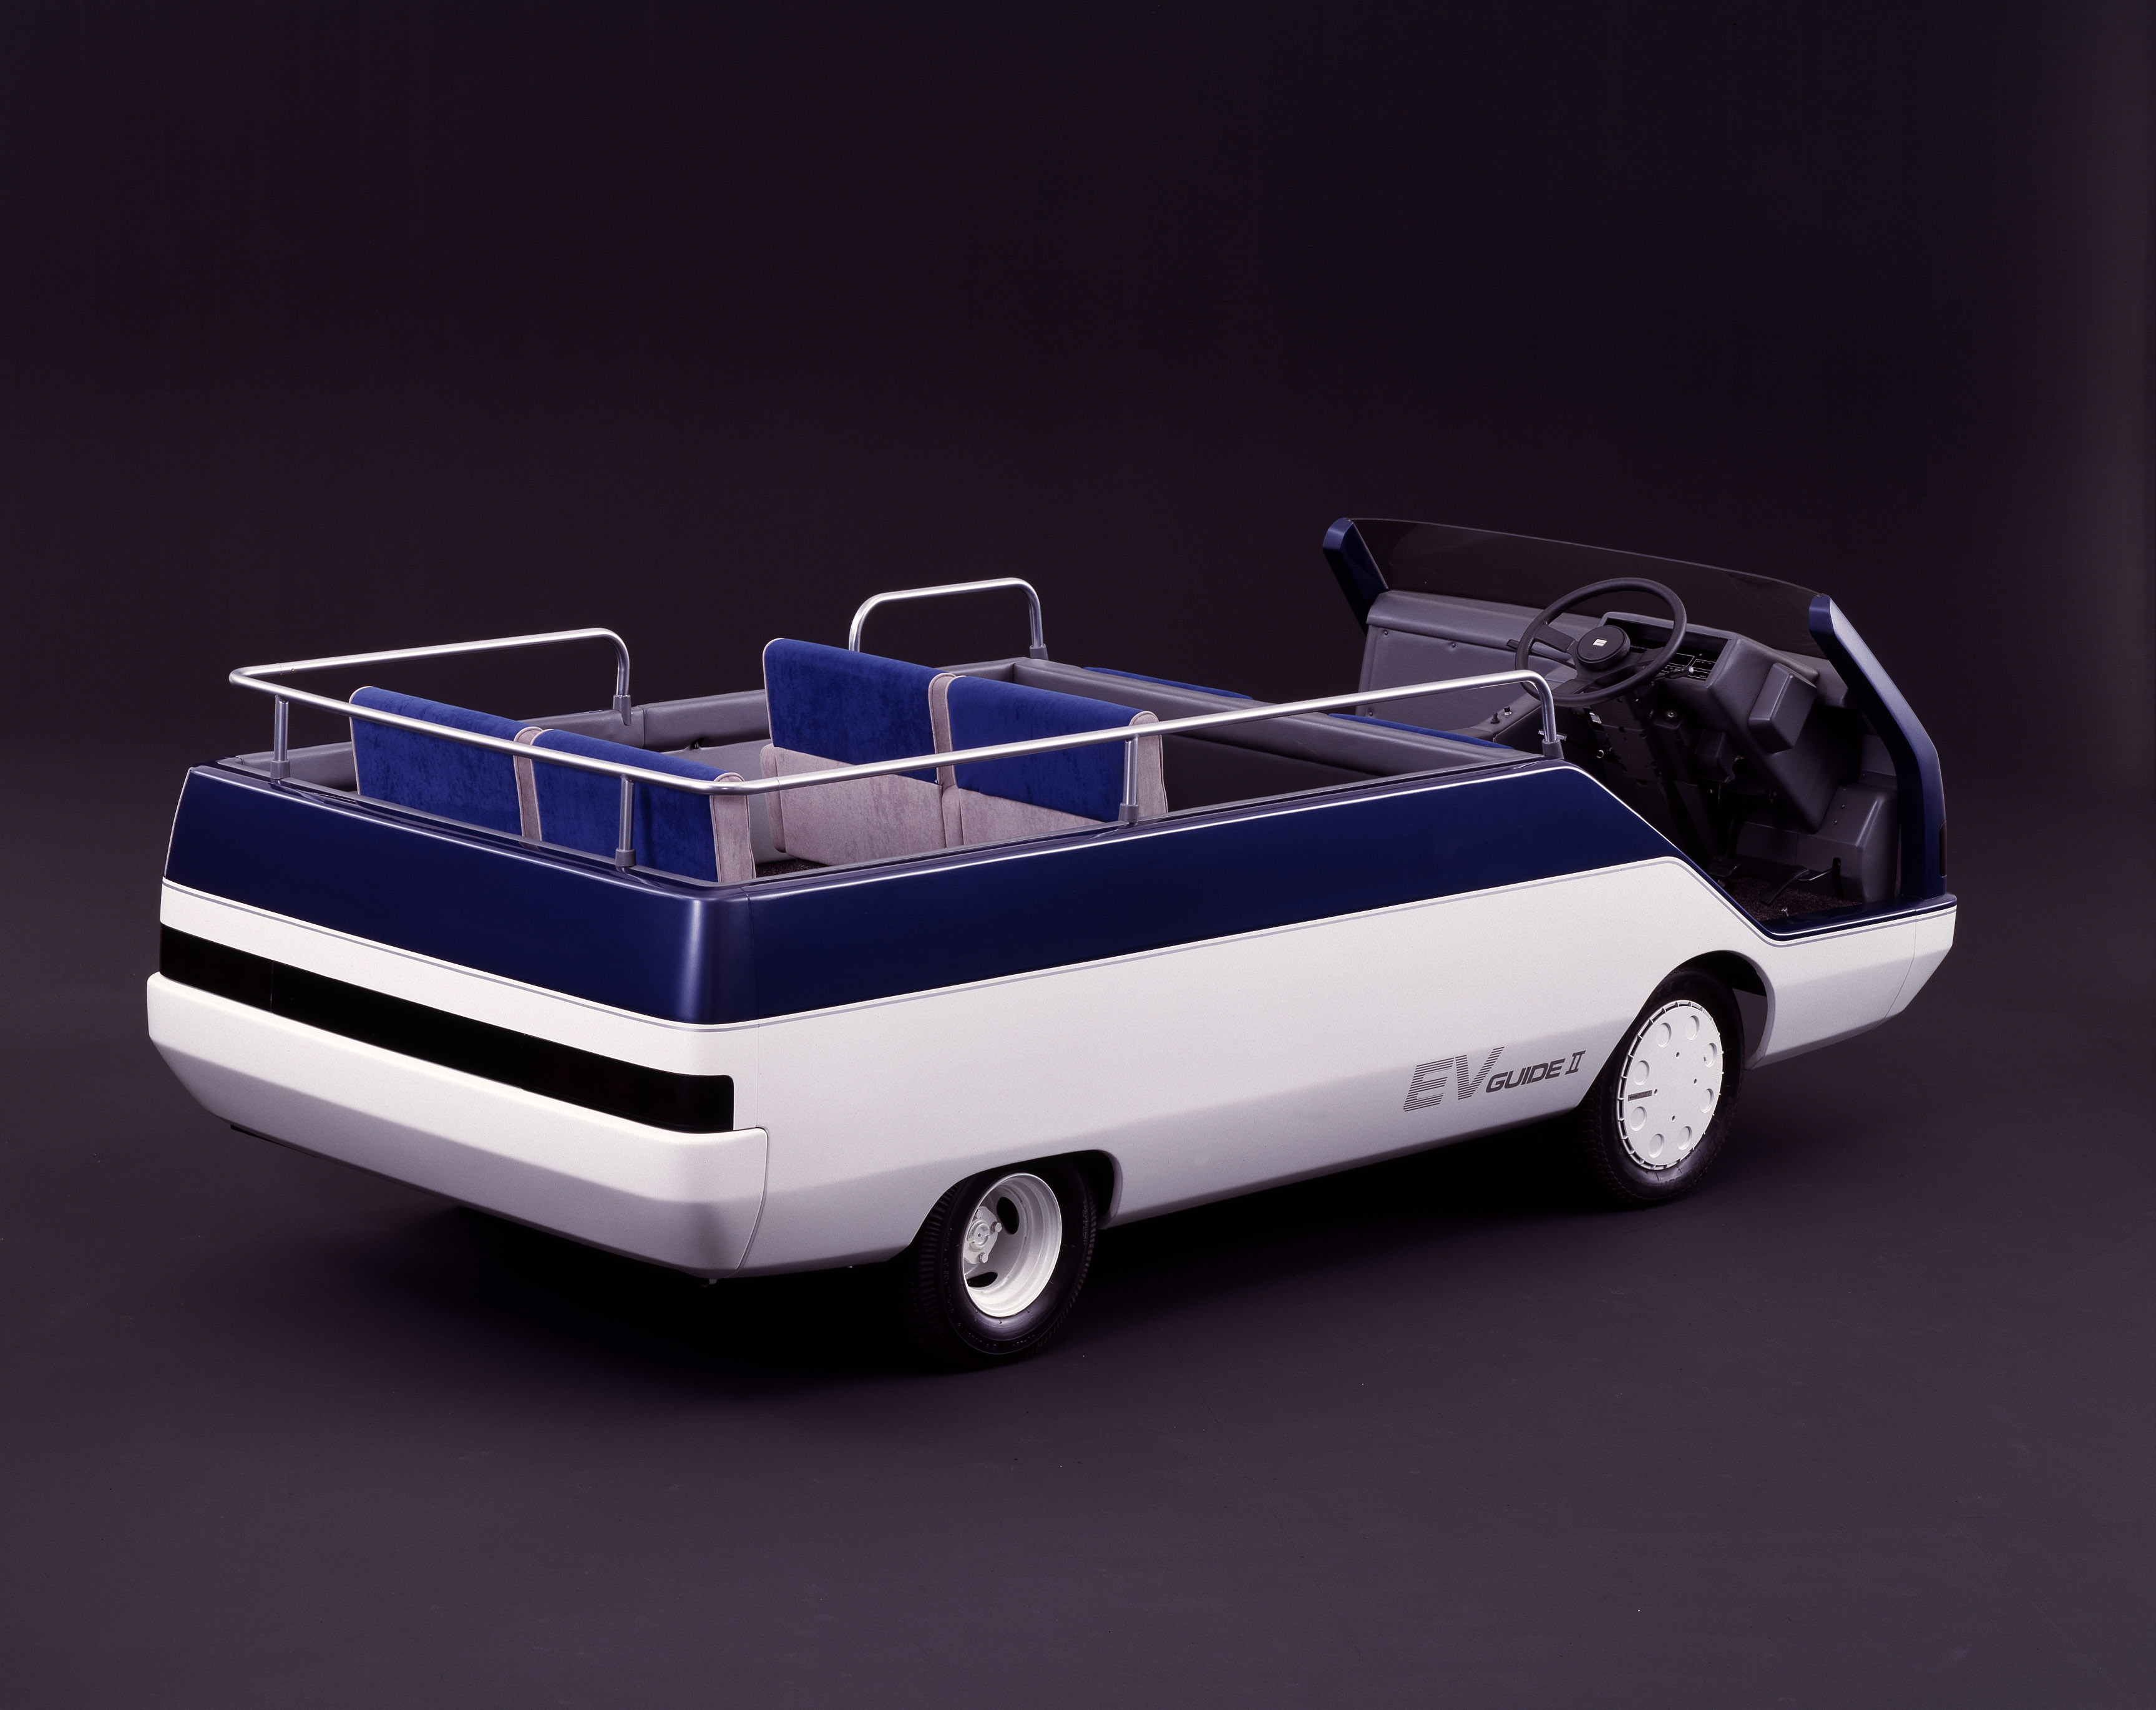 Nissan EV Guide-II Concept, 1985